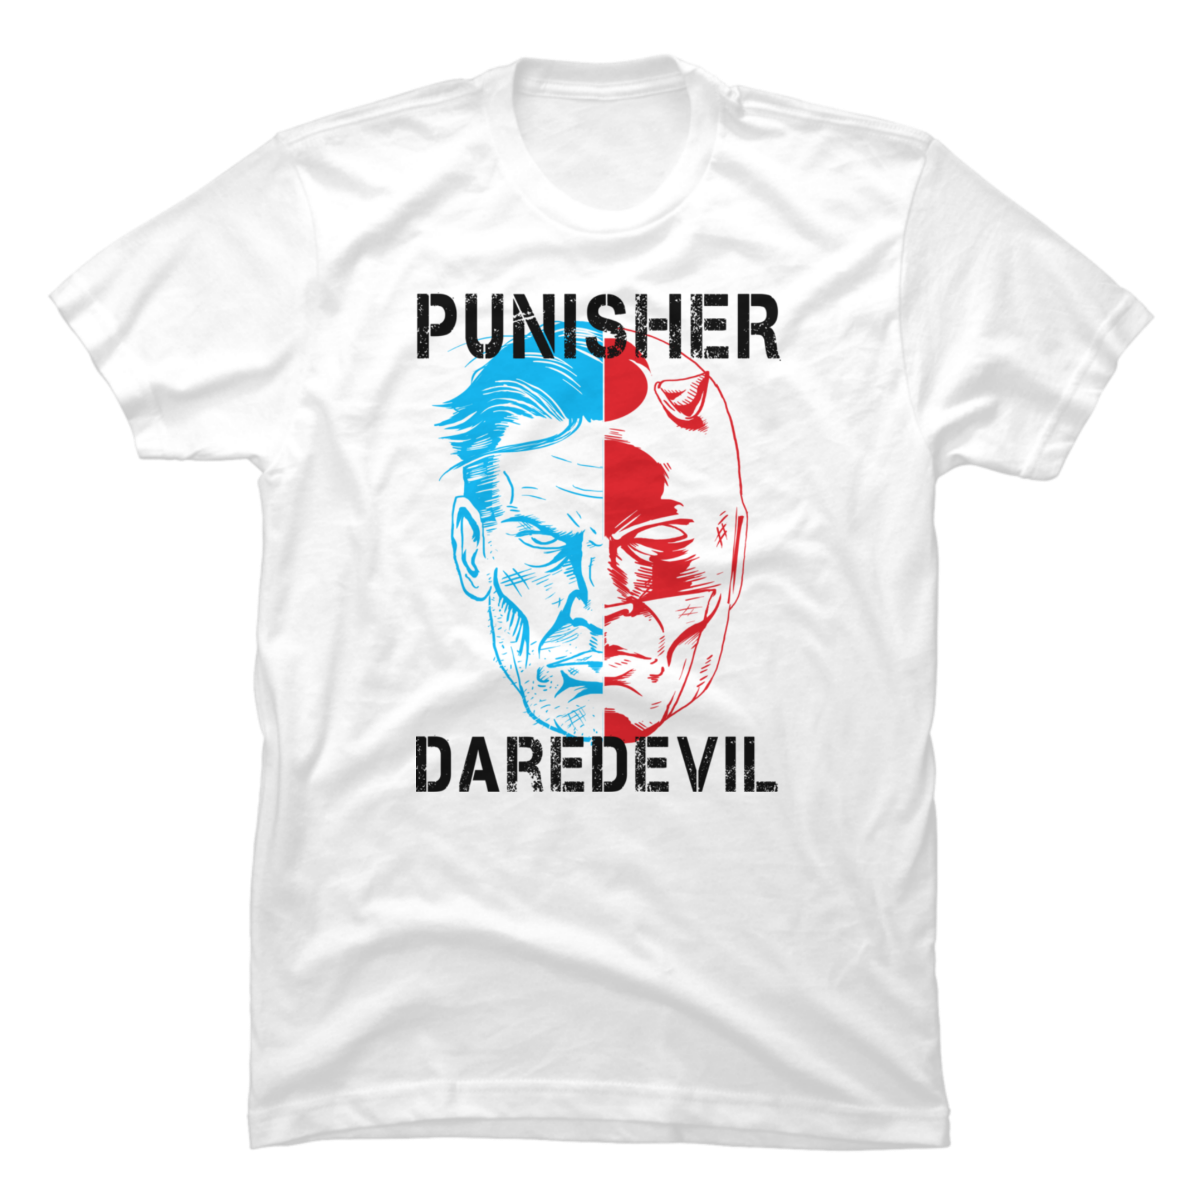 daredevil punisher shirt